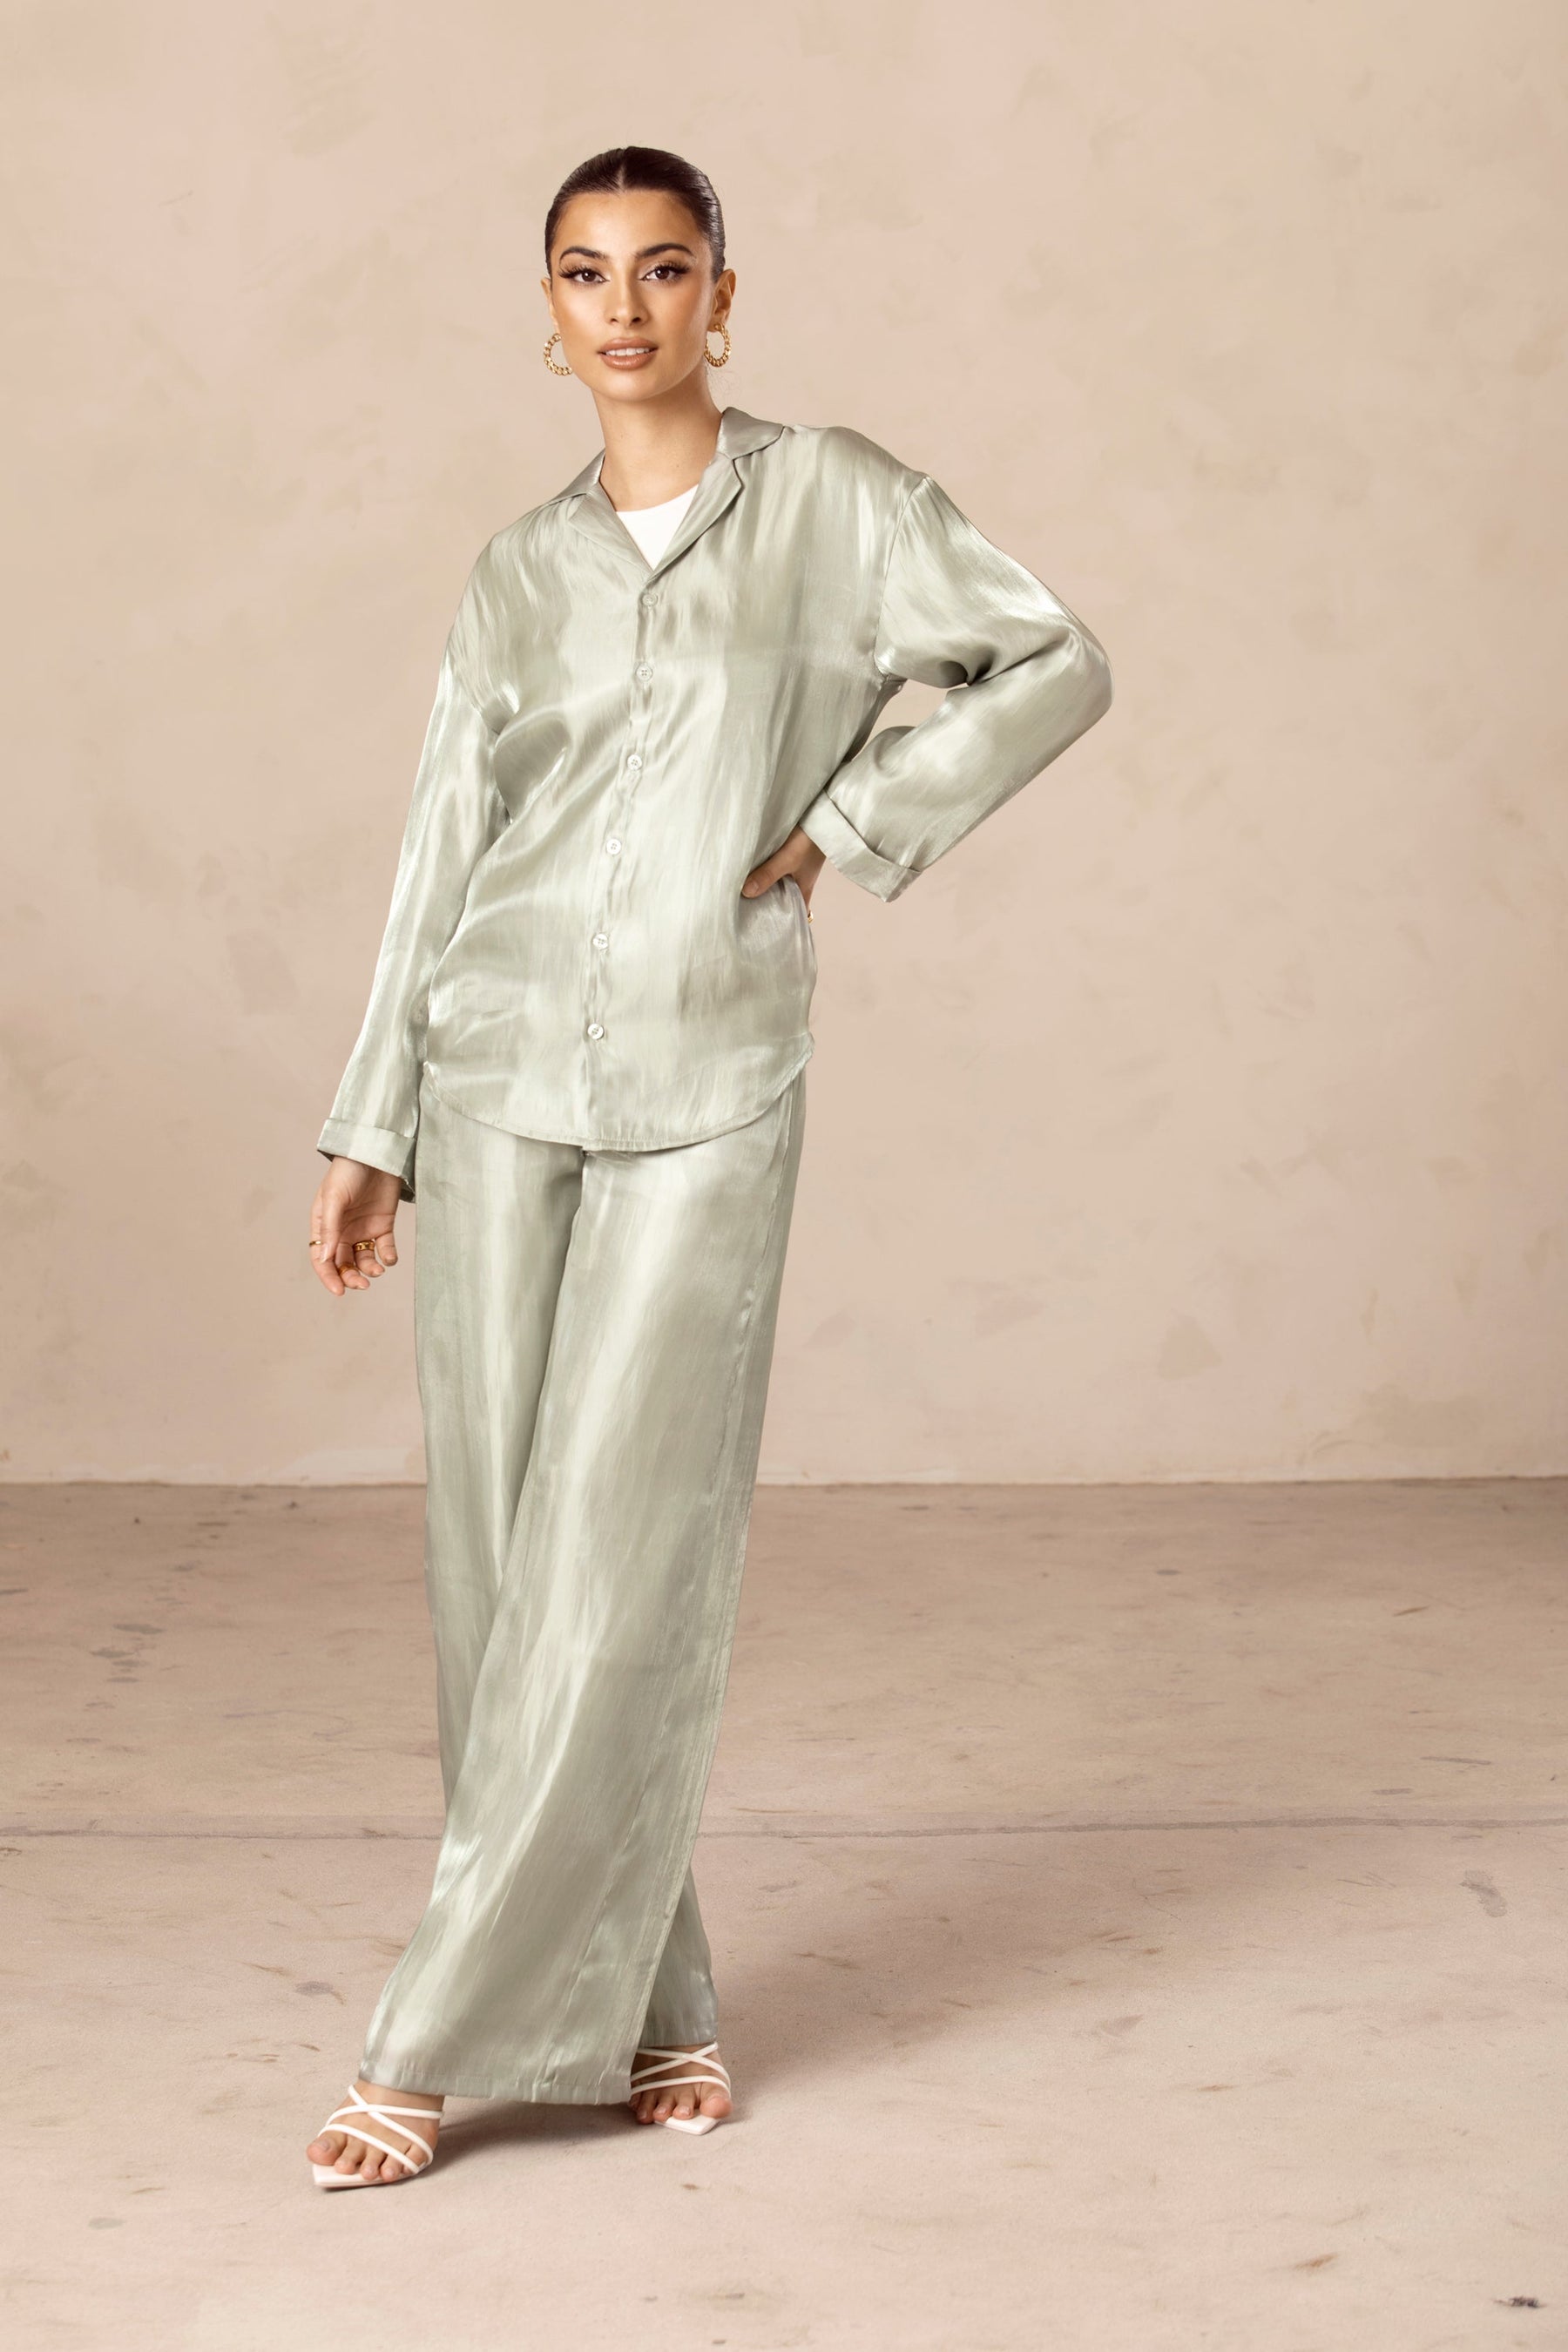 Anikka Satin Button Down Shirt - Light Green Veiled Collection 